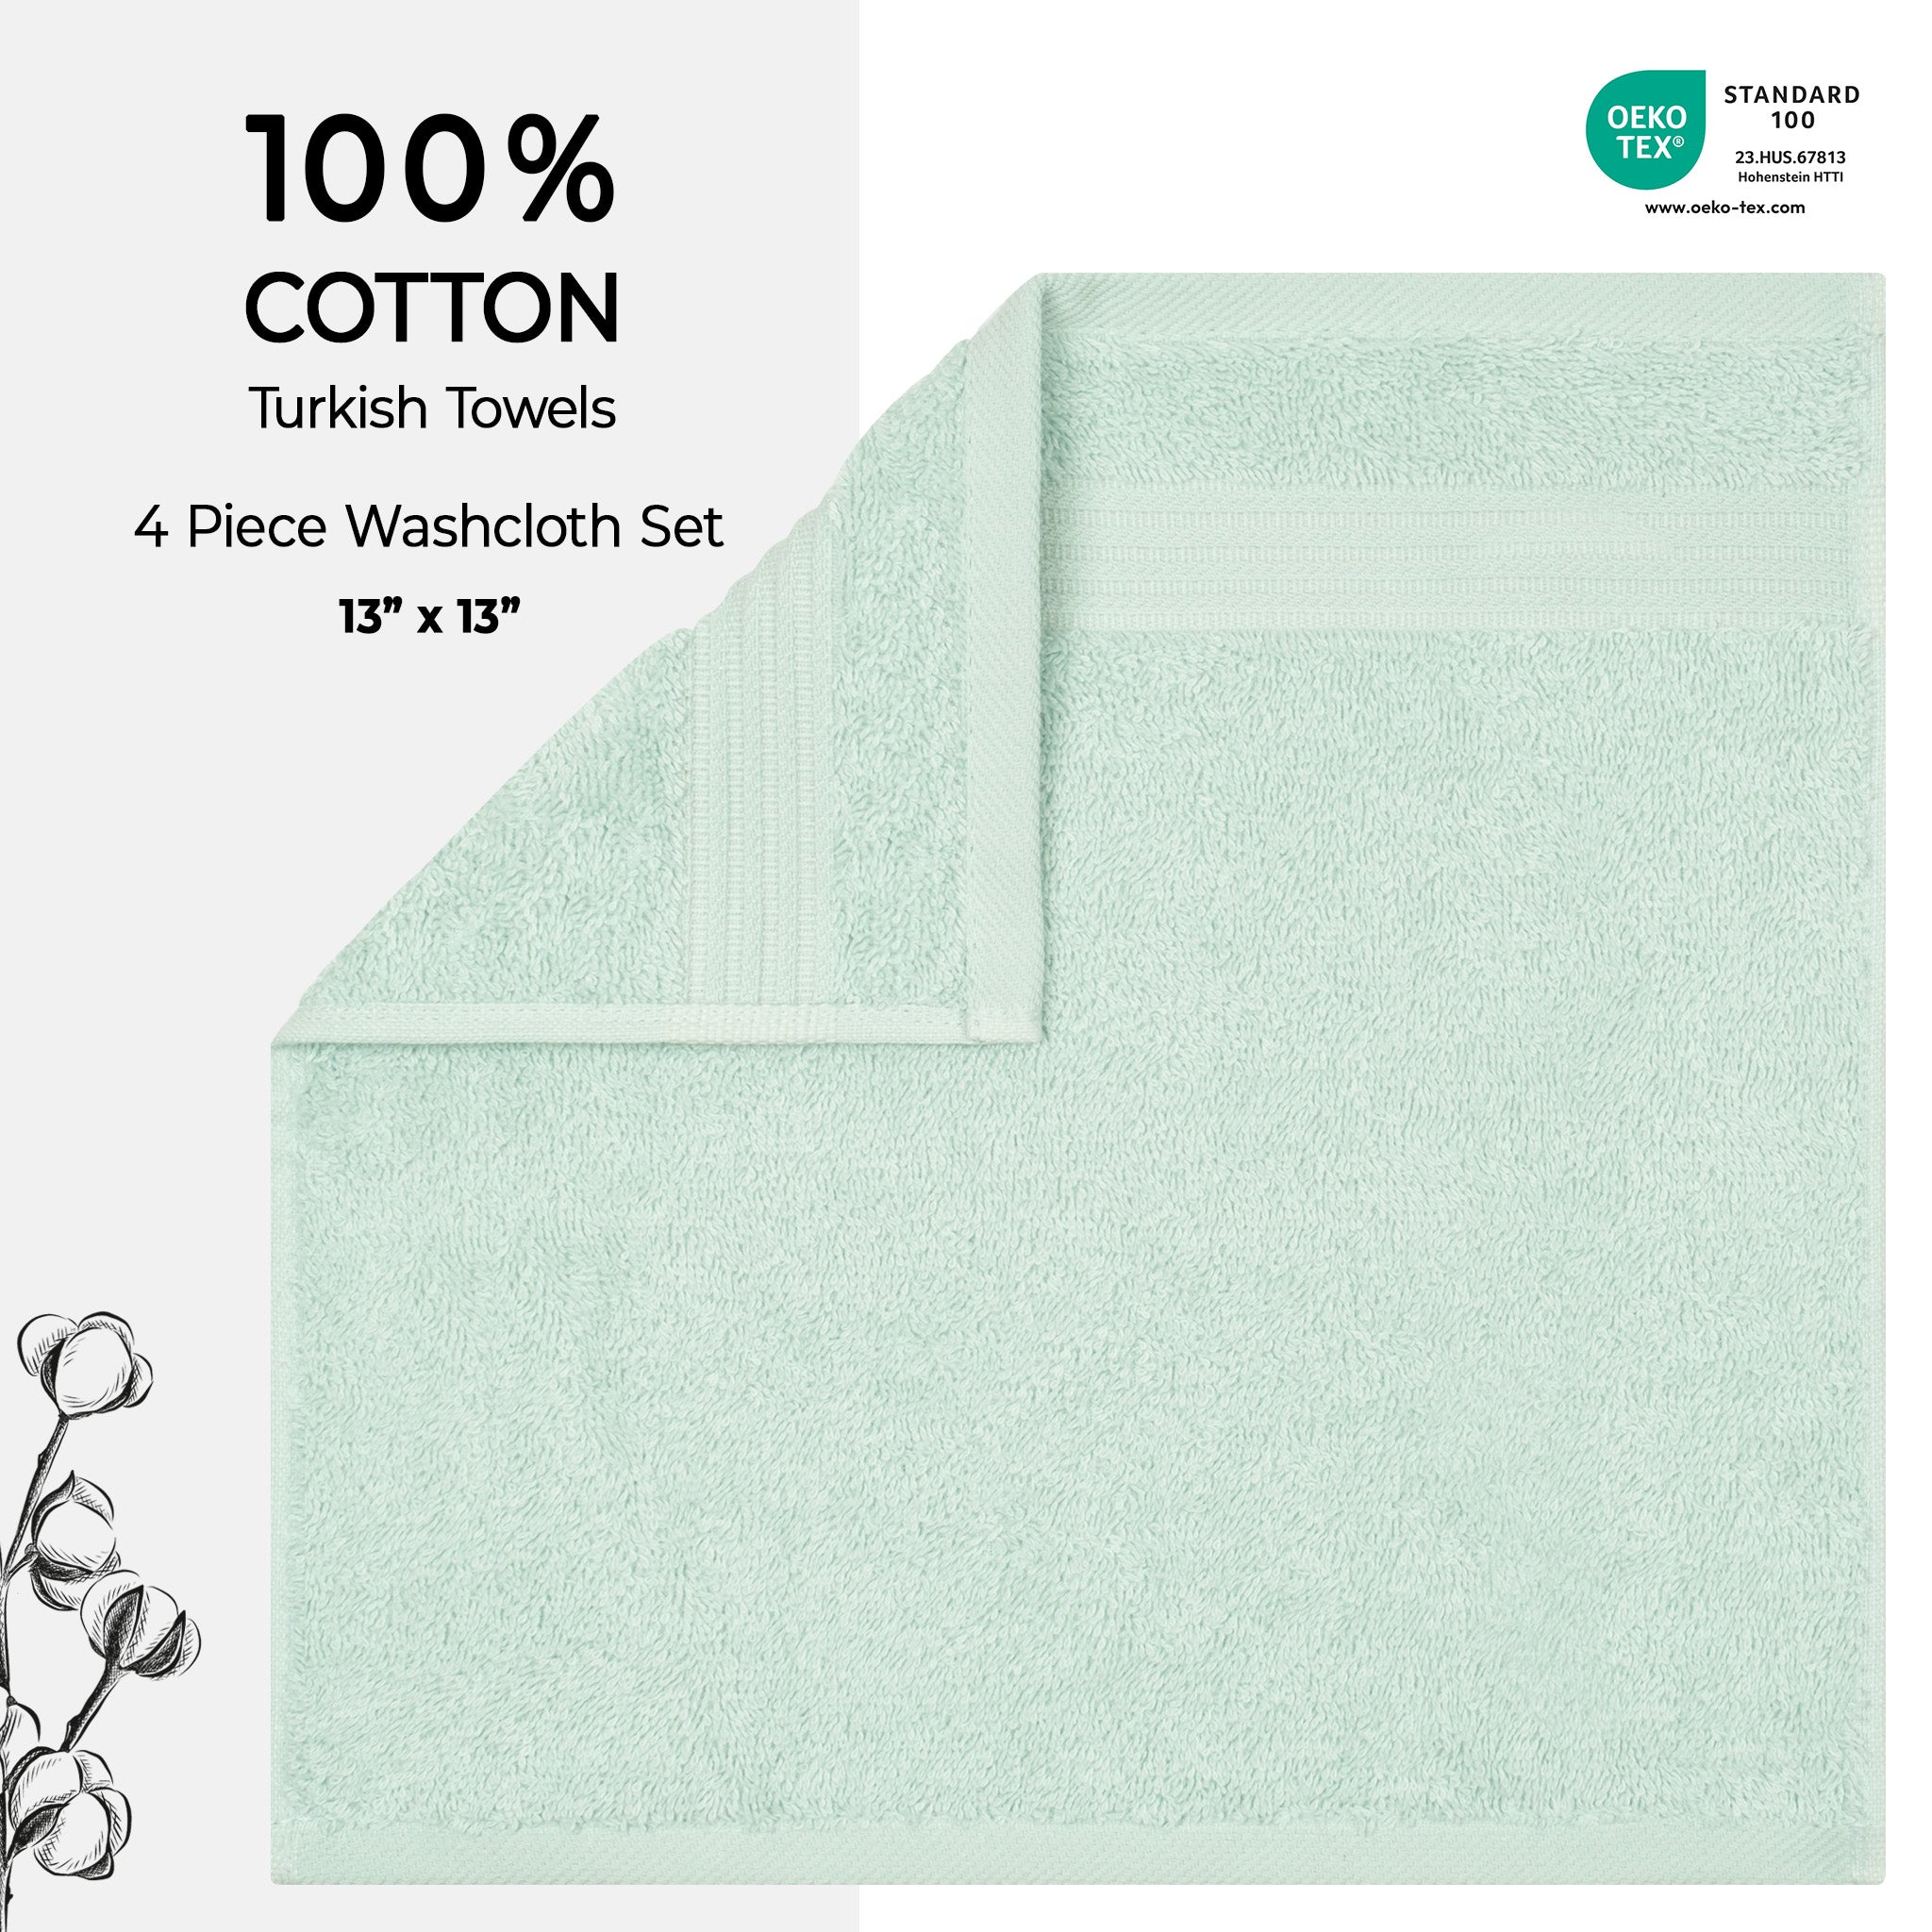 American Soft Linen Bekos 100% Cotton Turkish Towels, 4 Piece Washcloth Towel Set -mint-02